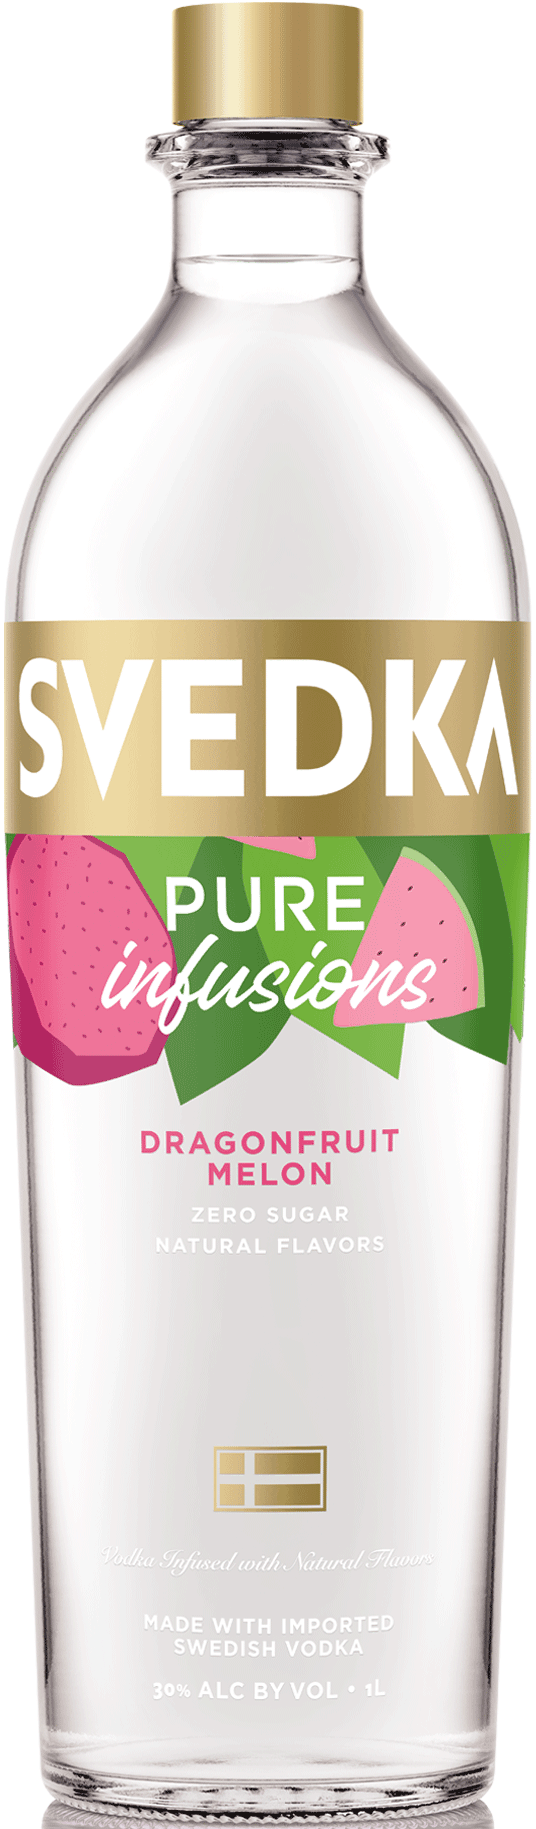 Svedka Dragonfruit Melon Vodka